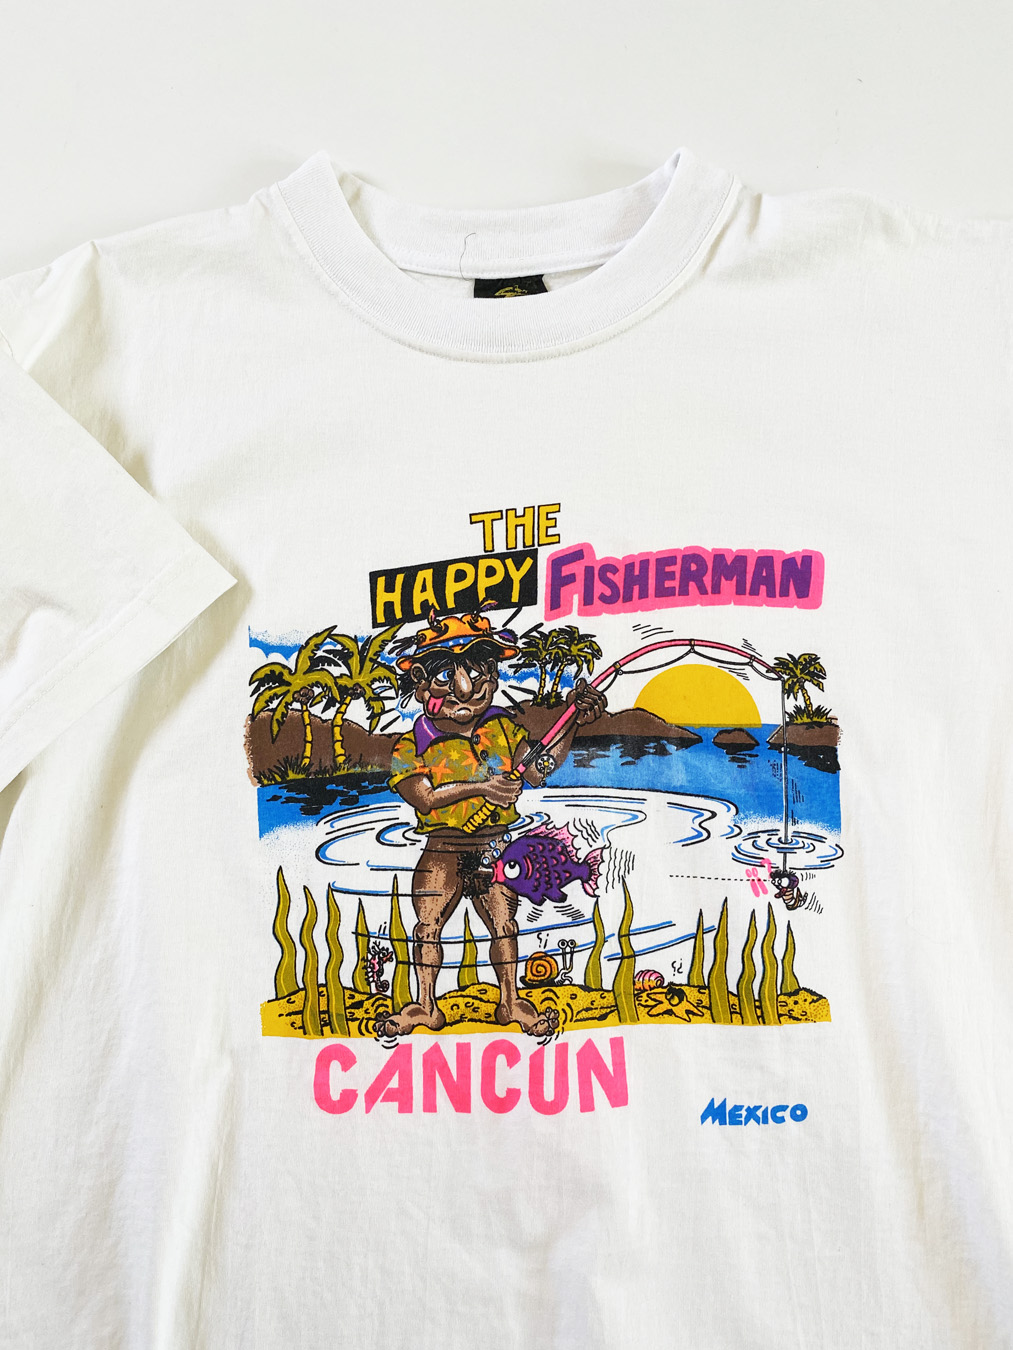 The Happy Fisherman Cancun White T-Shirt XXL - 5 Star Vintage